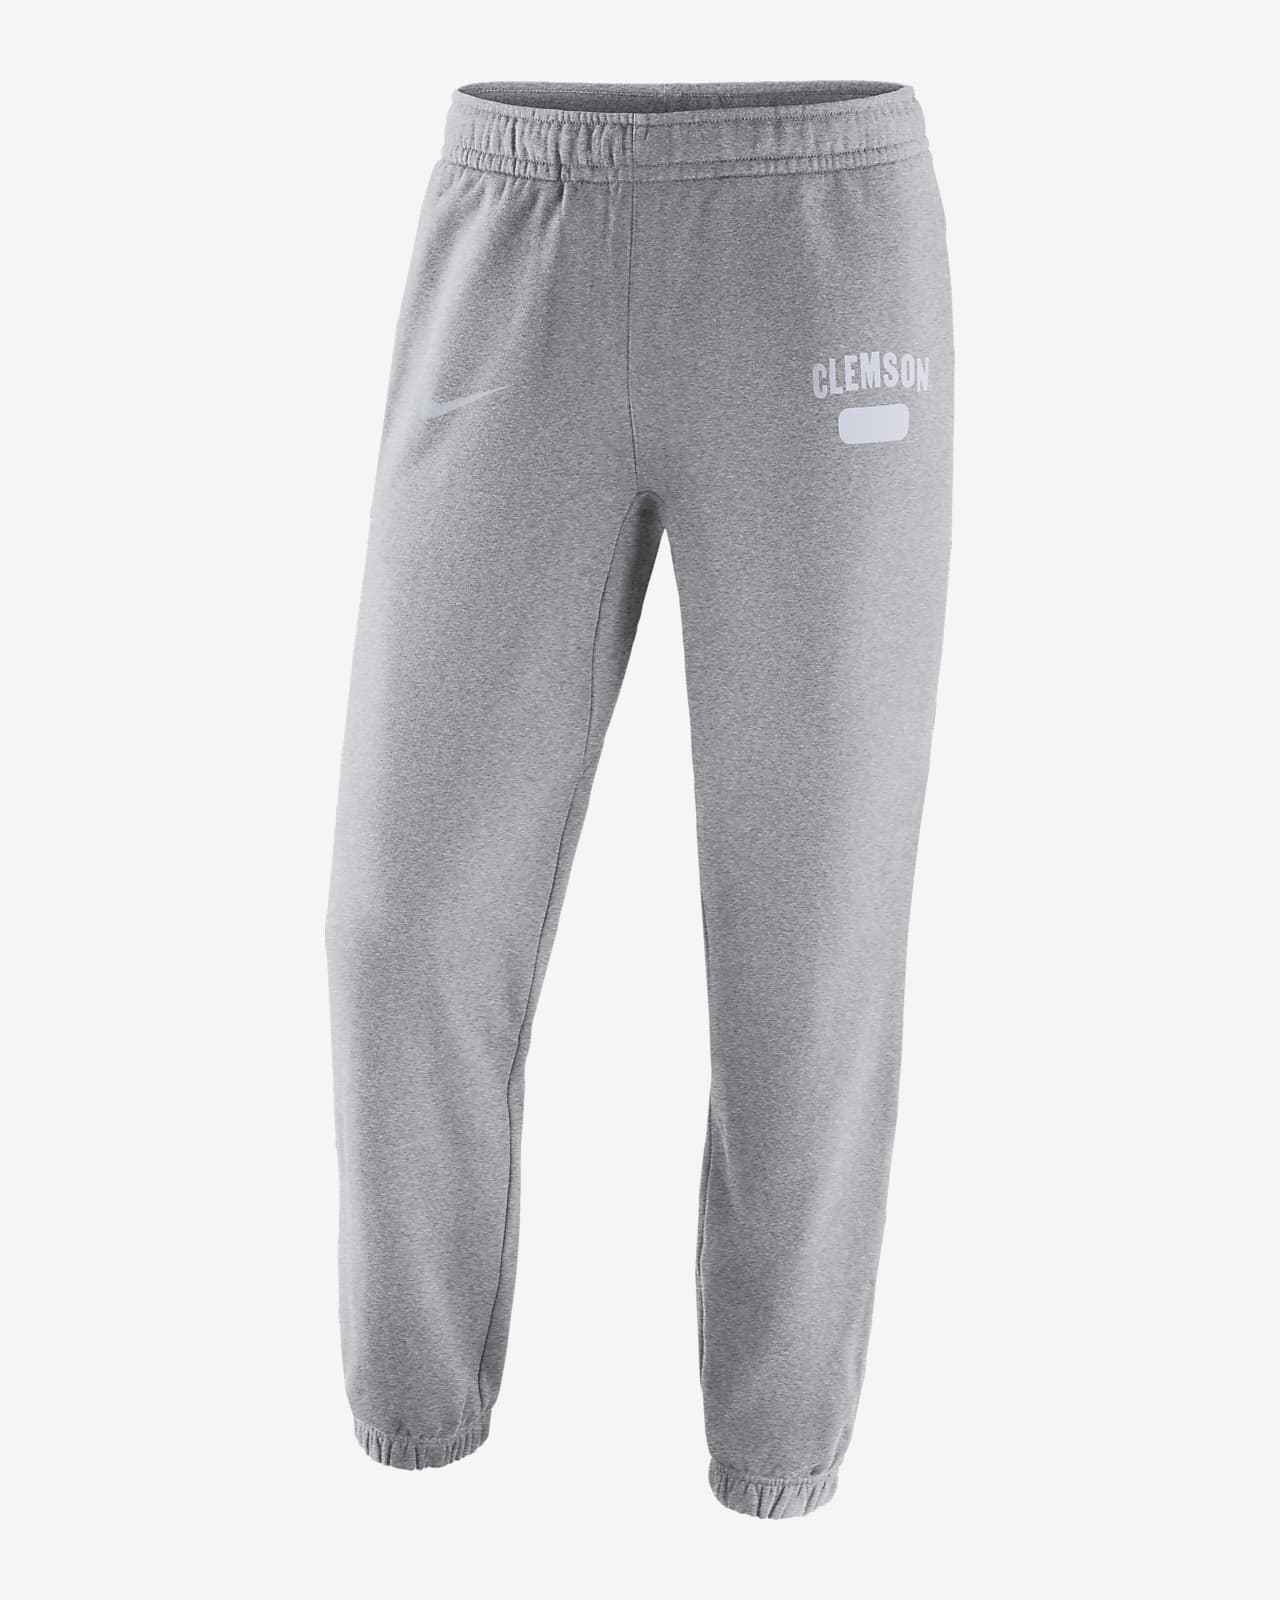 Nike College (Clemson) Fleece Pants